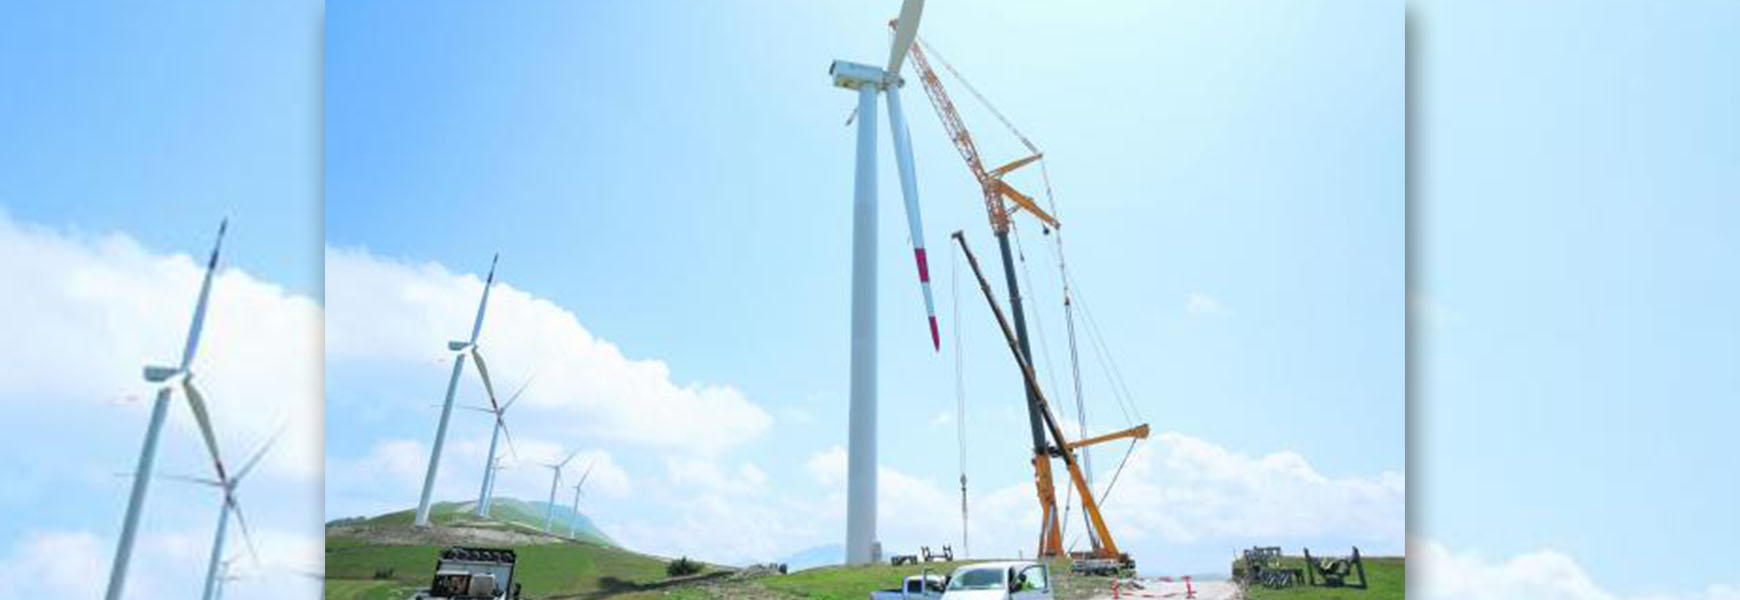 Wind farm on Krnovo to power over 50.000 households